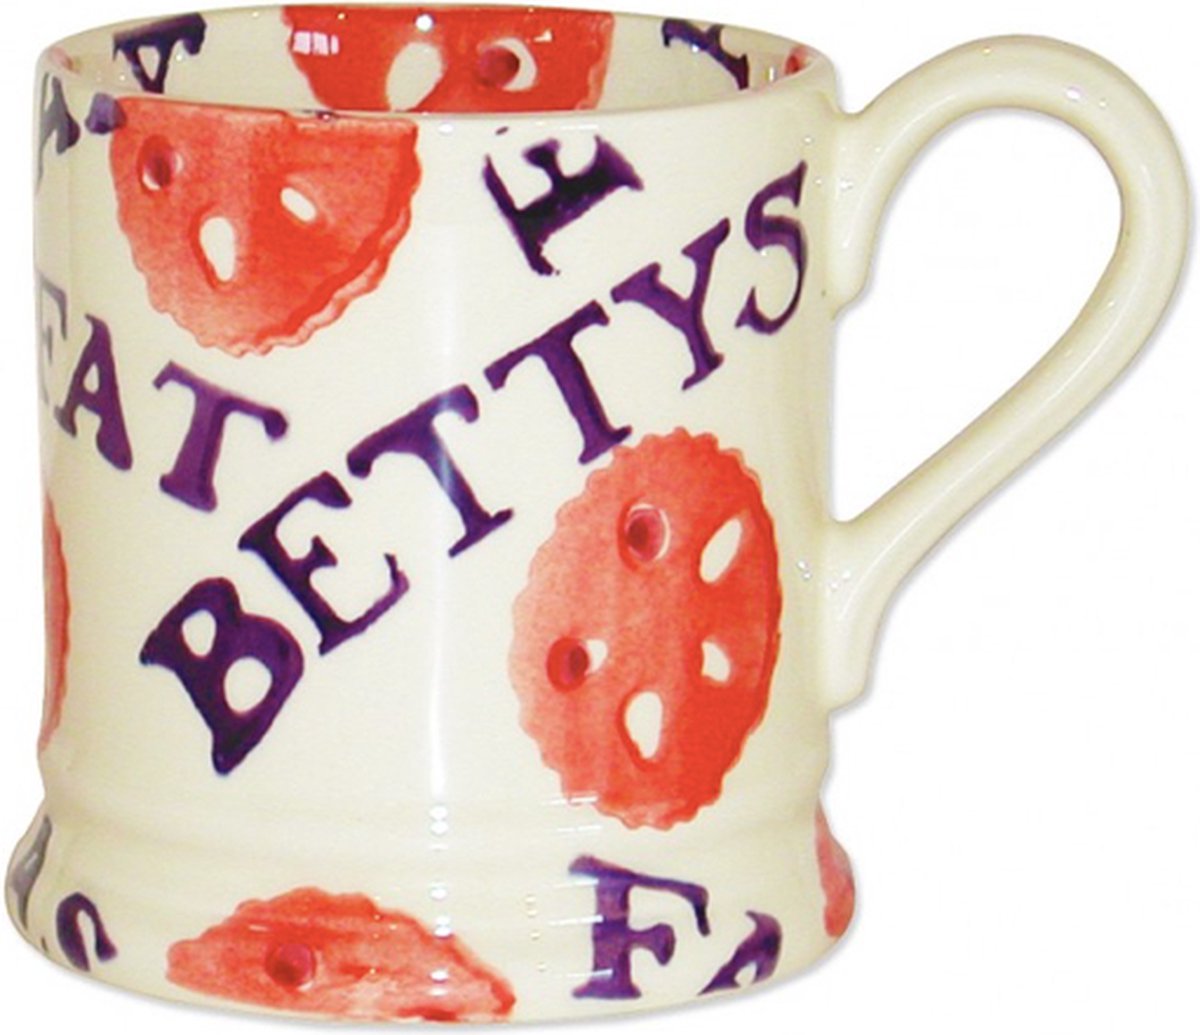 Emma Bridgewater Mug 1/2 Pint Bettys Fat Rascal